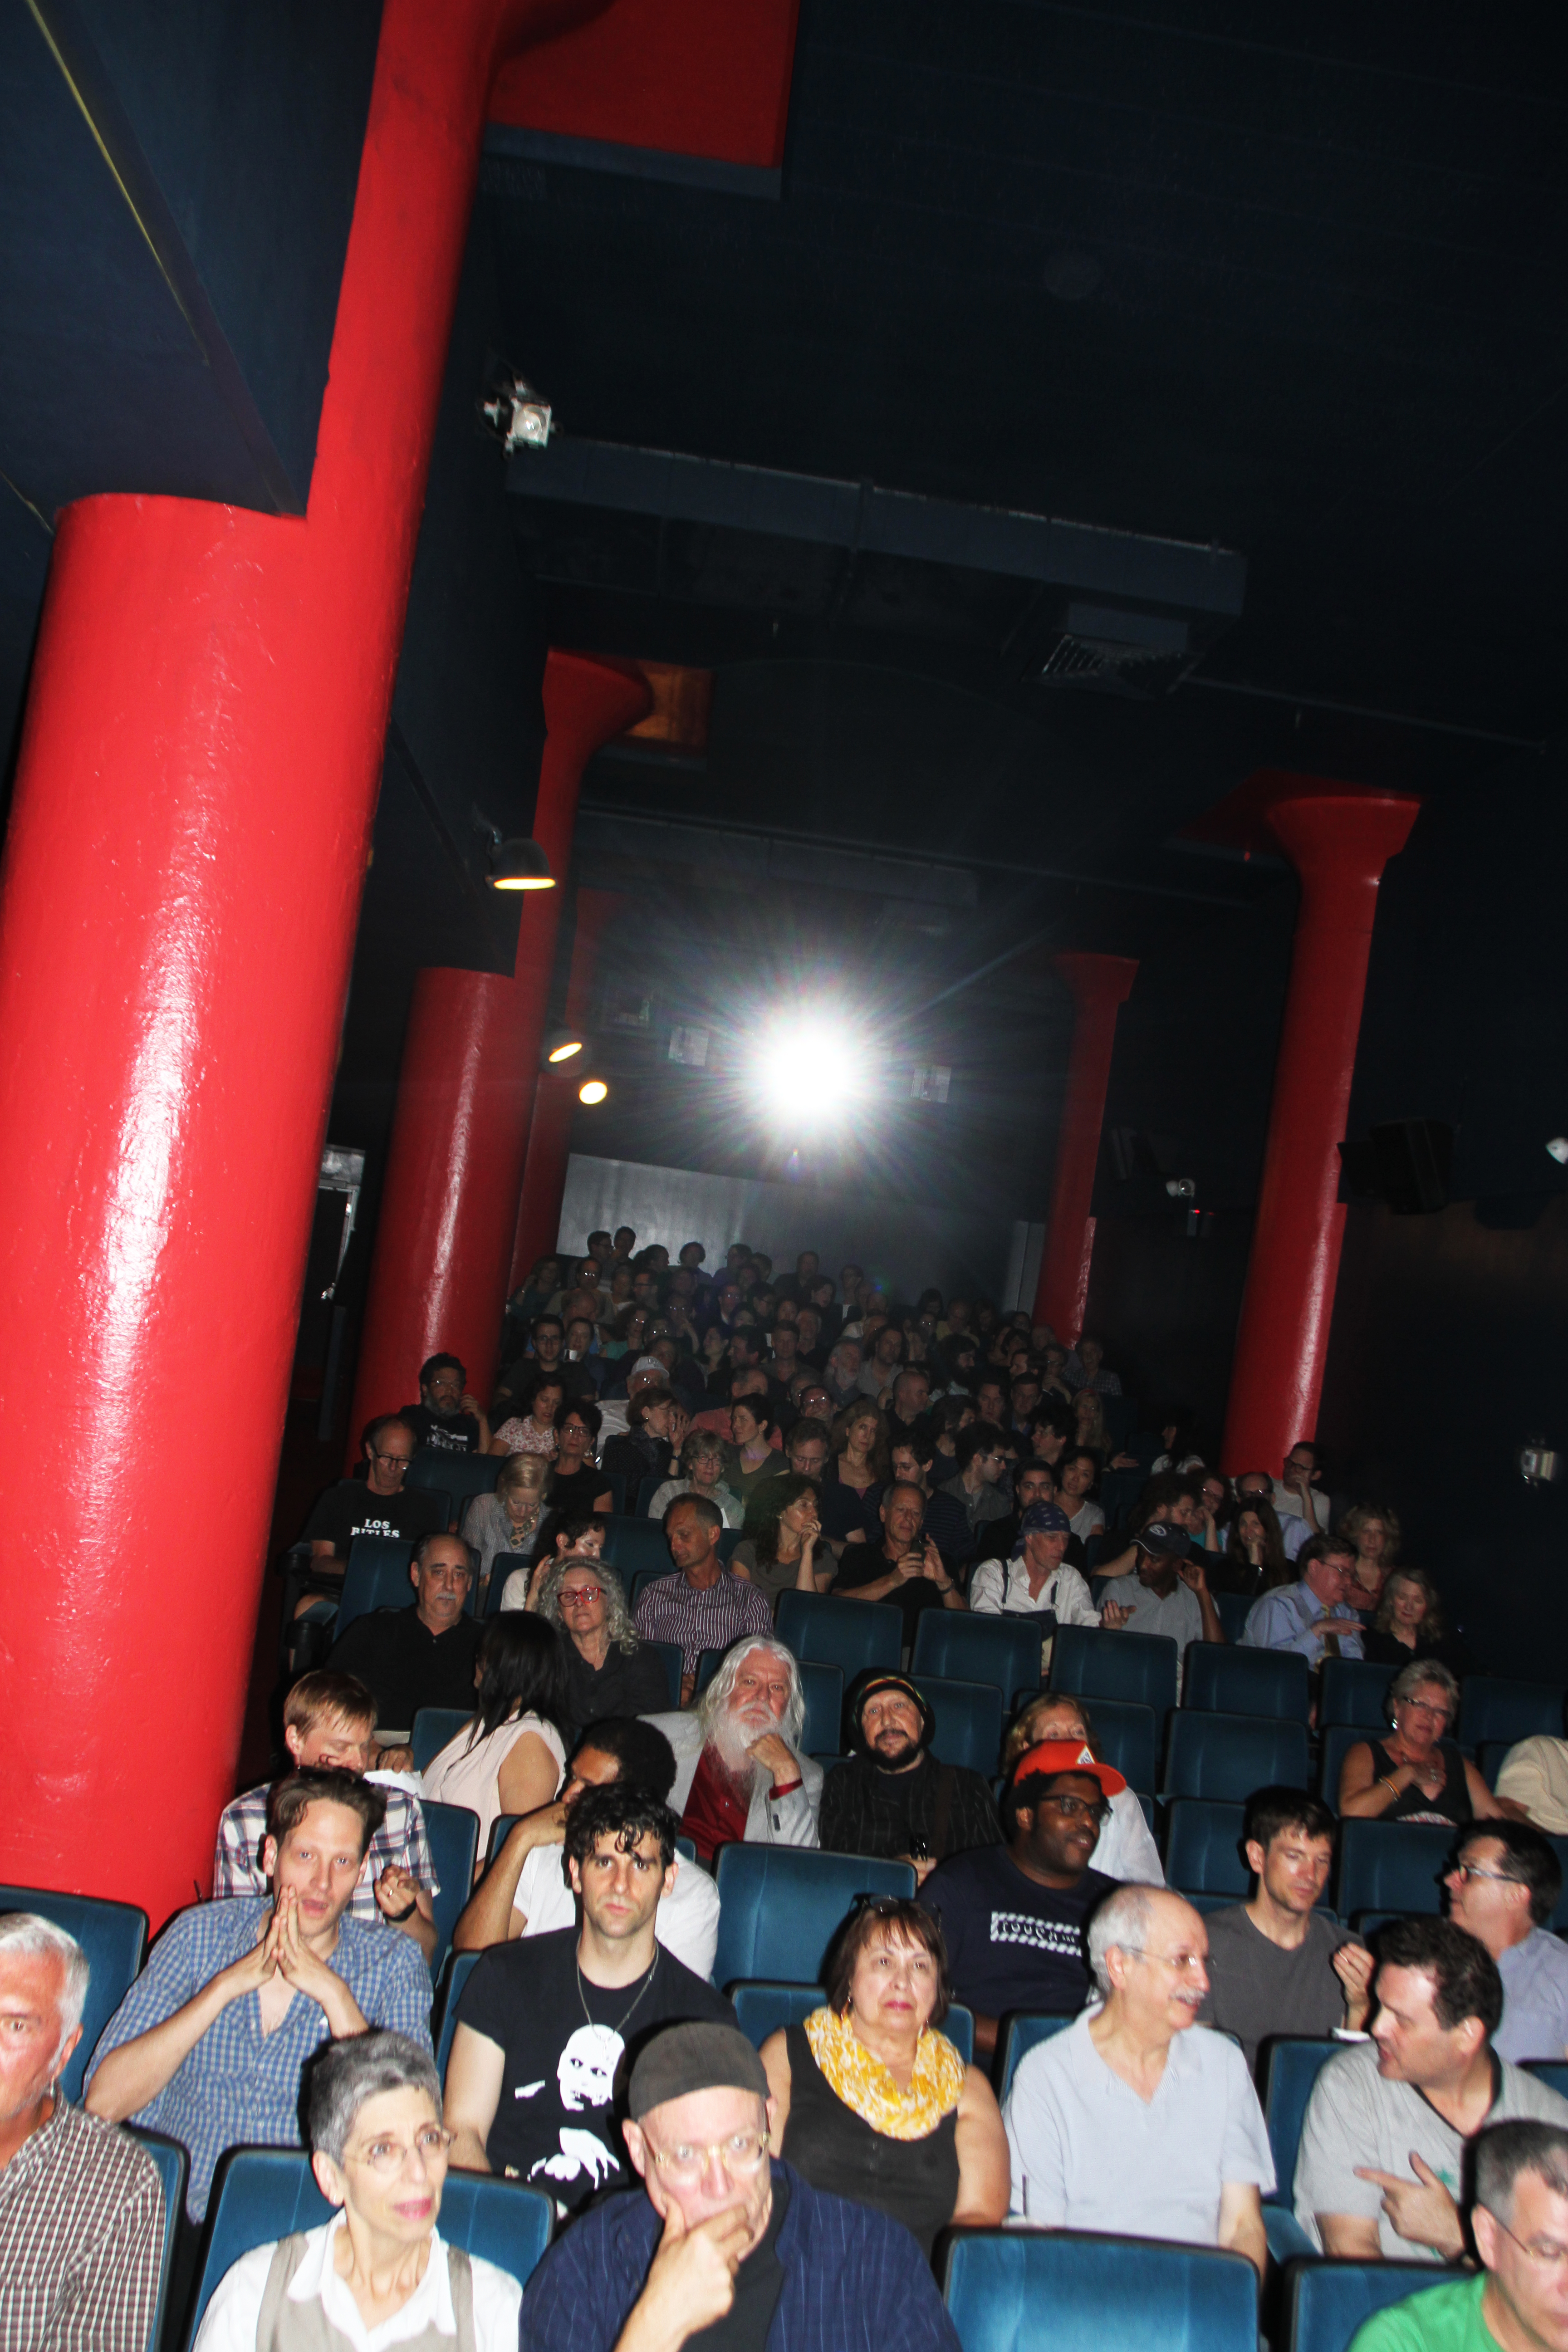 leon-russell-seated-in-audience-film-forum-GKJ_7134.jpg